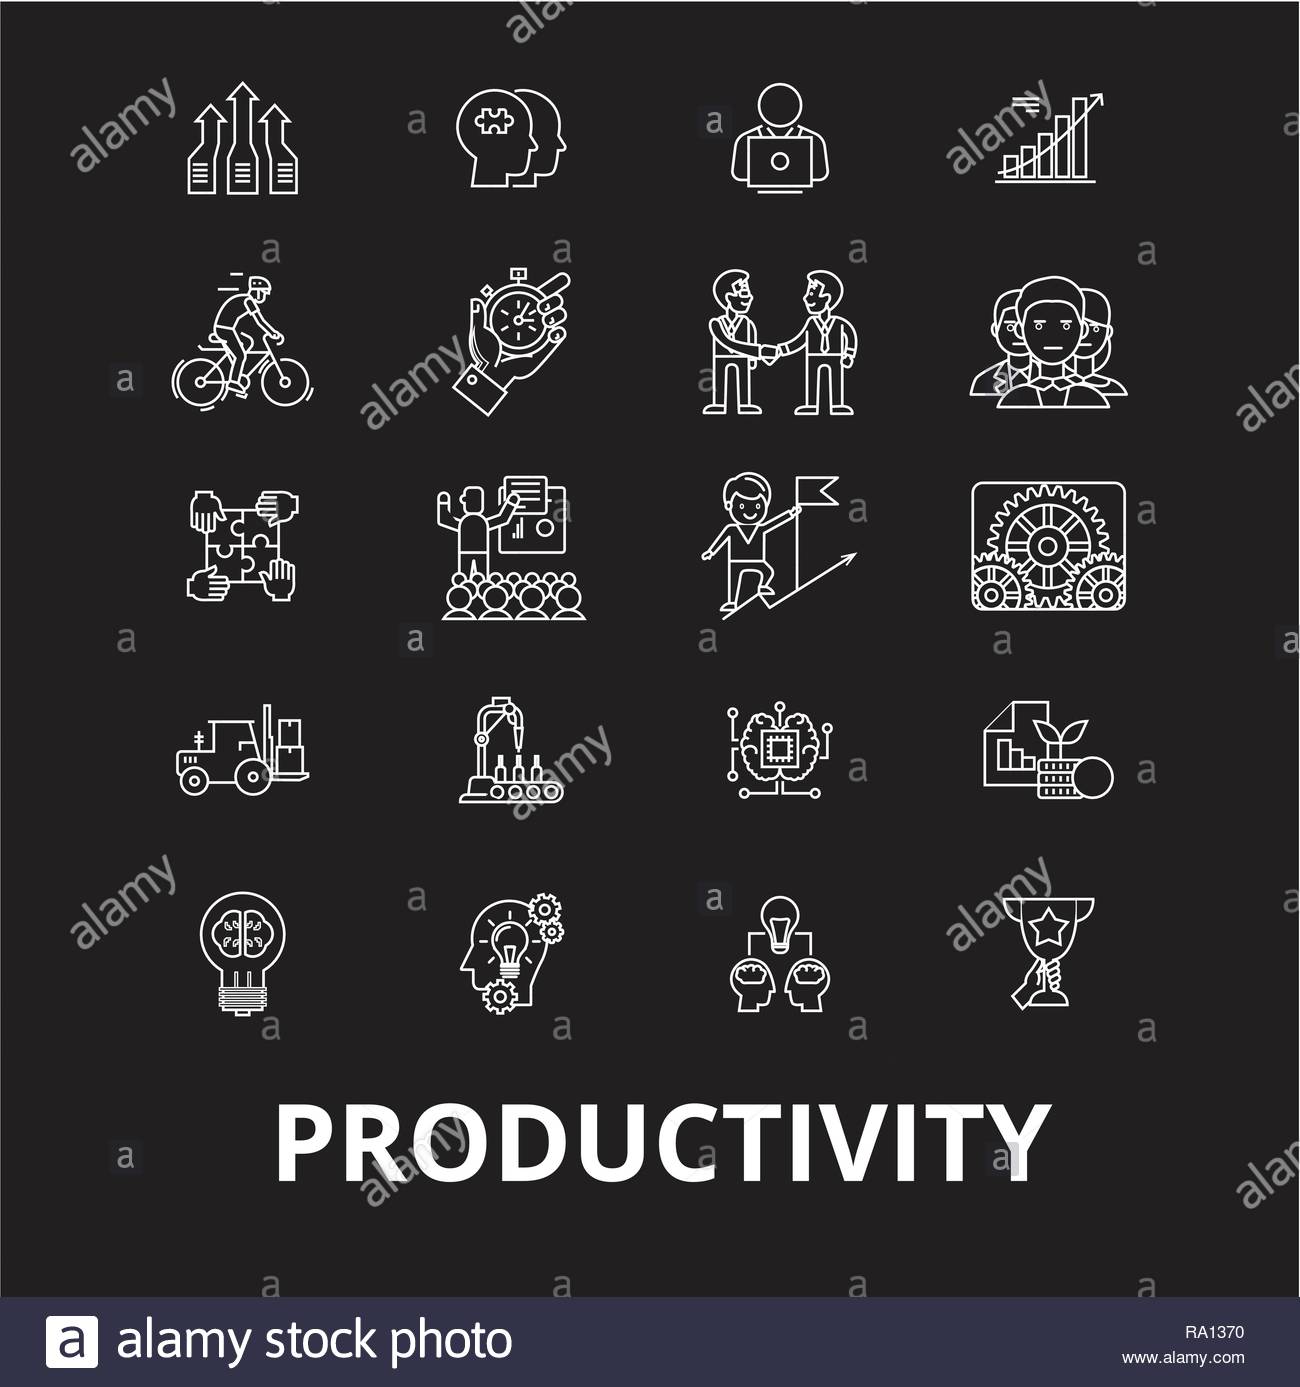 Productivity Editable Line Icons Vector Set On Black Background